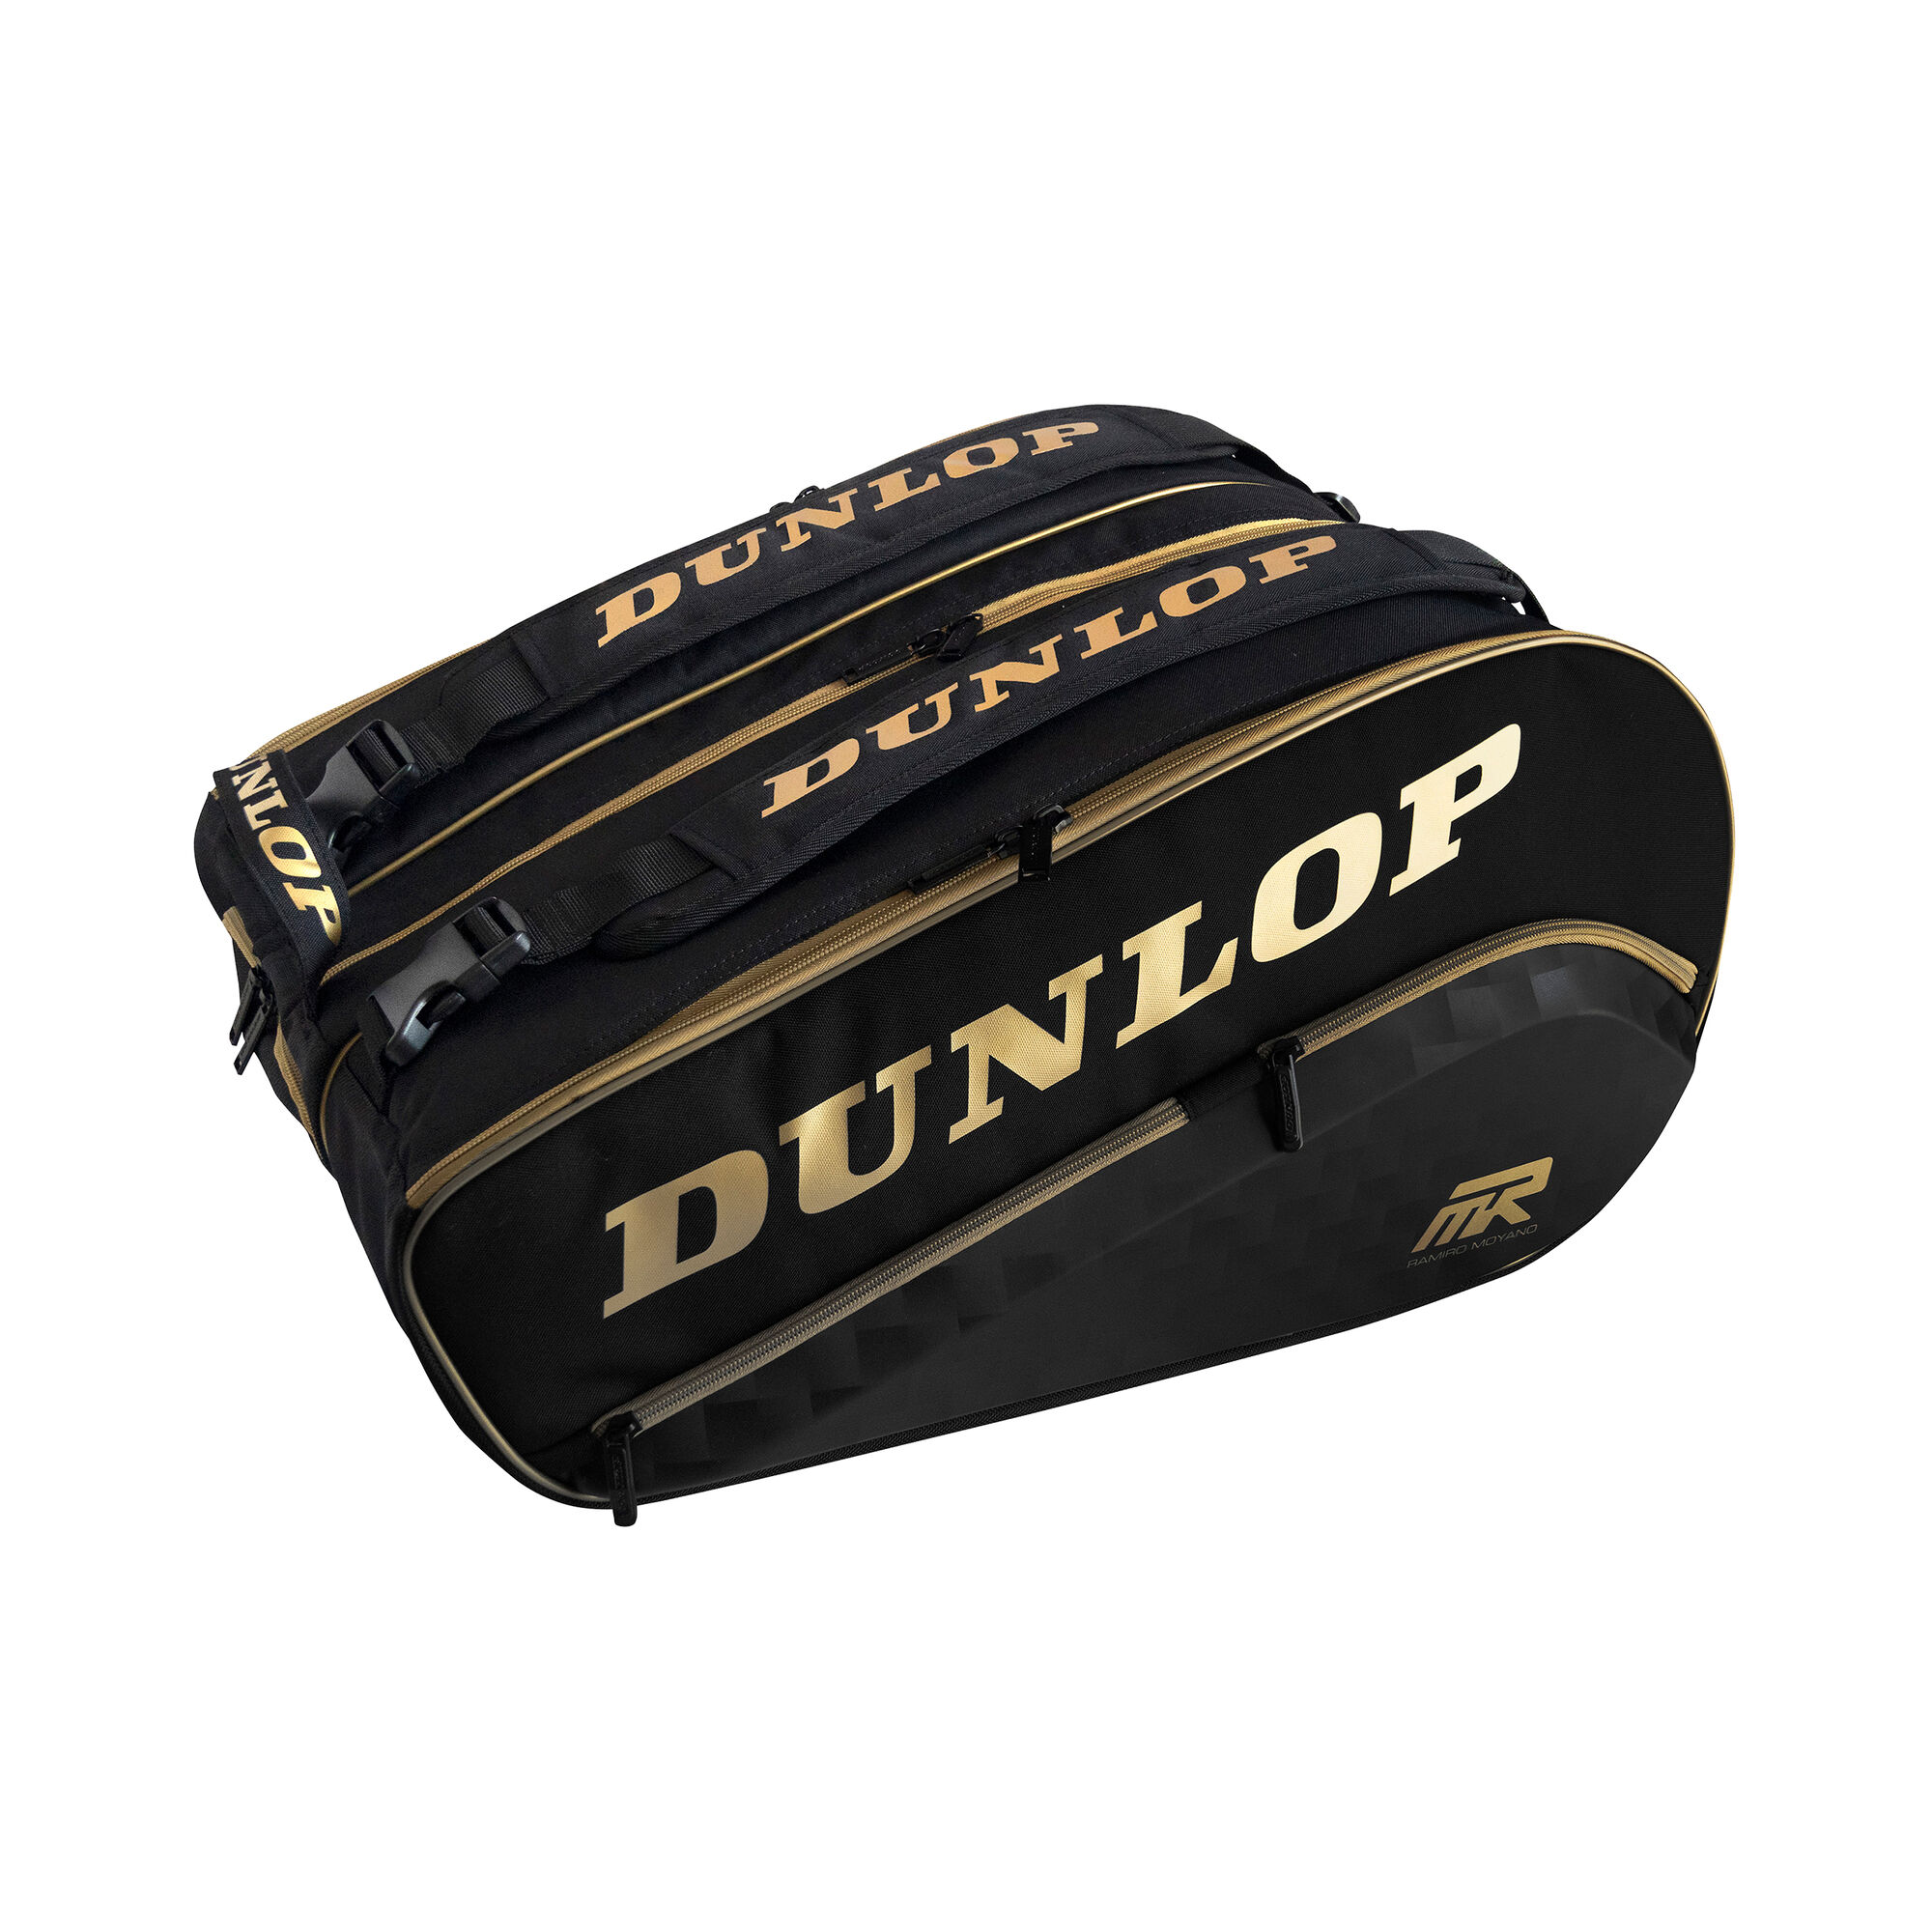 Dunlop Sports Paletero Elite - Bolsa de pádel